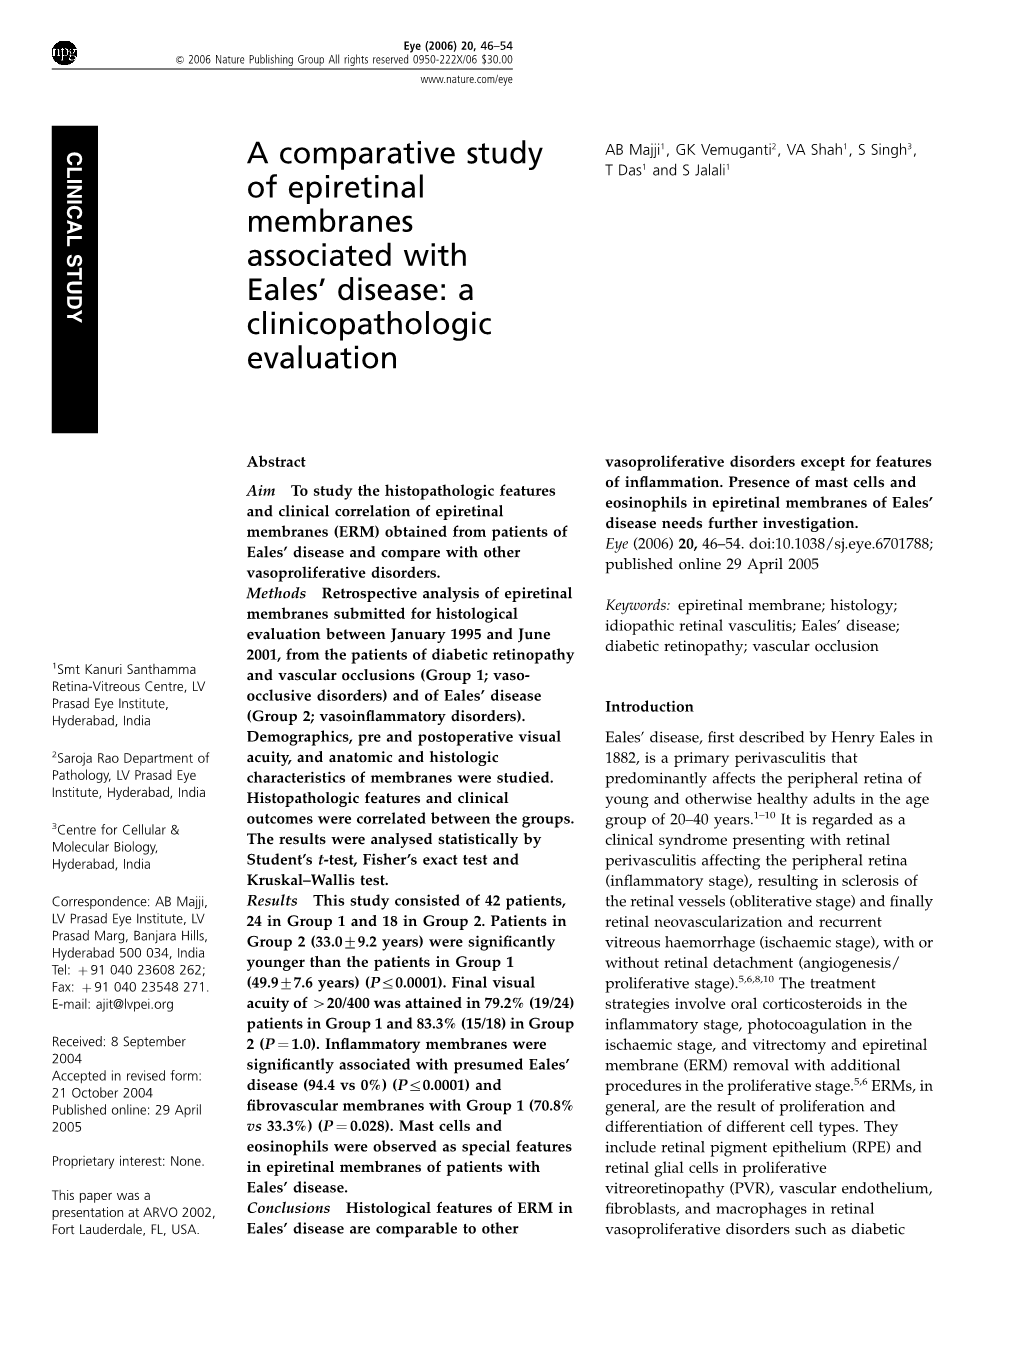 A Comparative Study of Epiretinal Membranes Associated